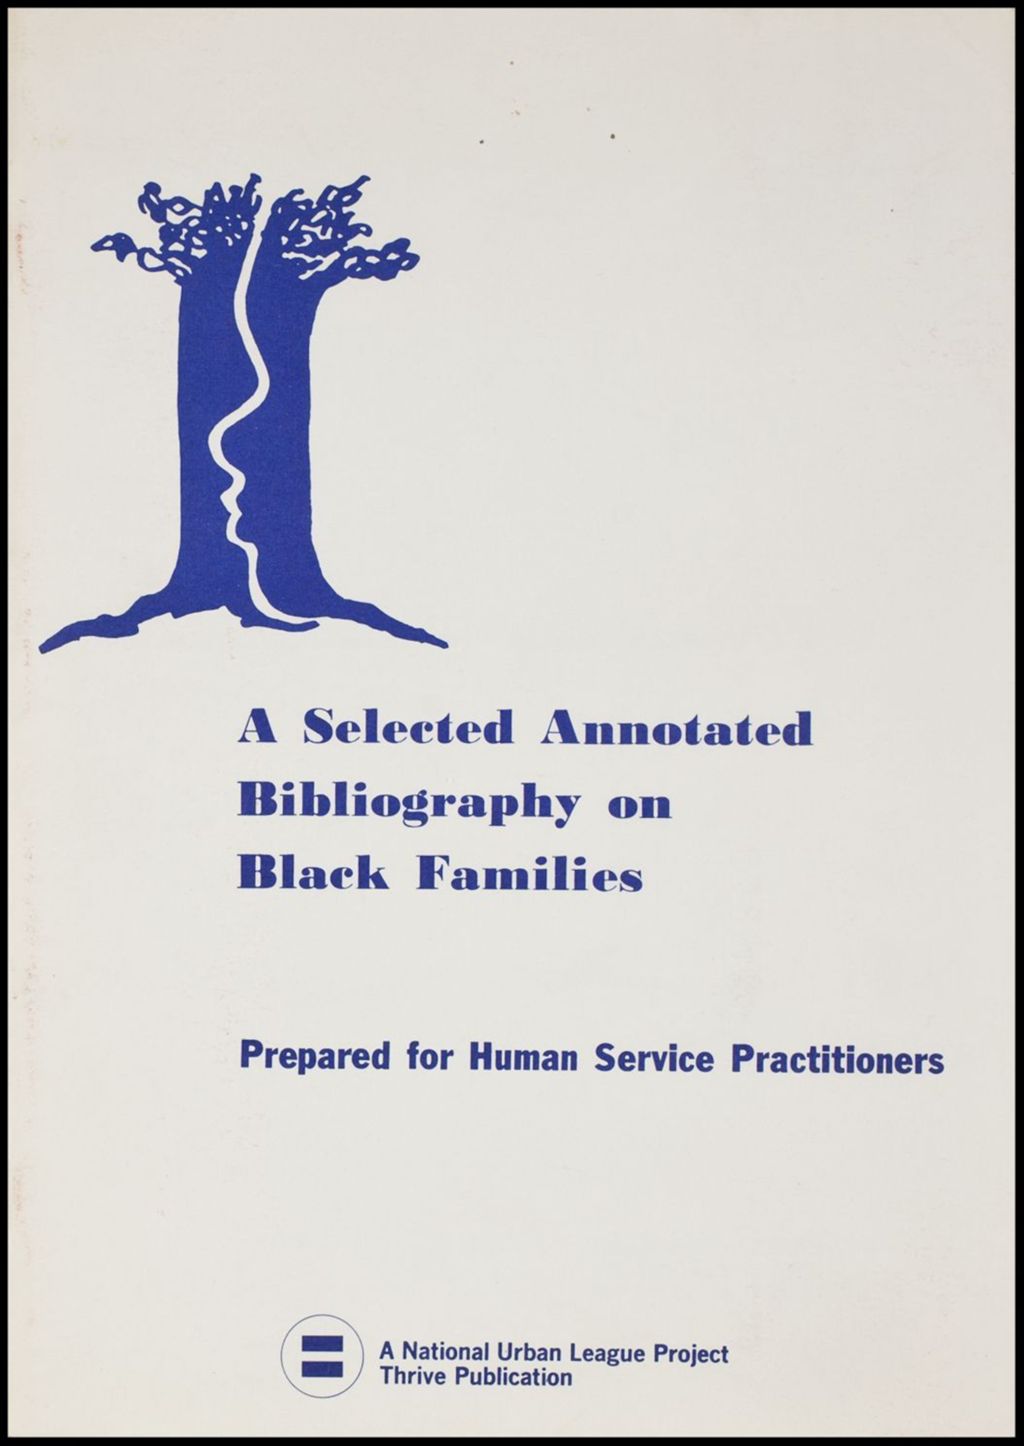 Miniature of UL Bibliography on Black Families, 1977 (Folder IV-729)